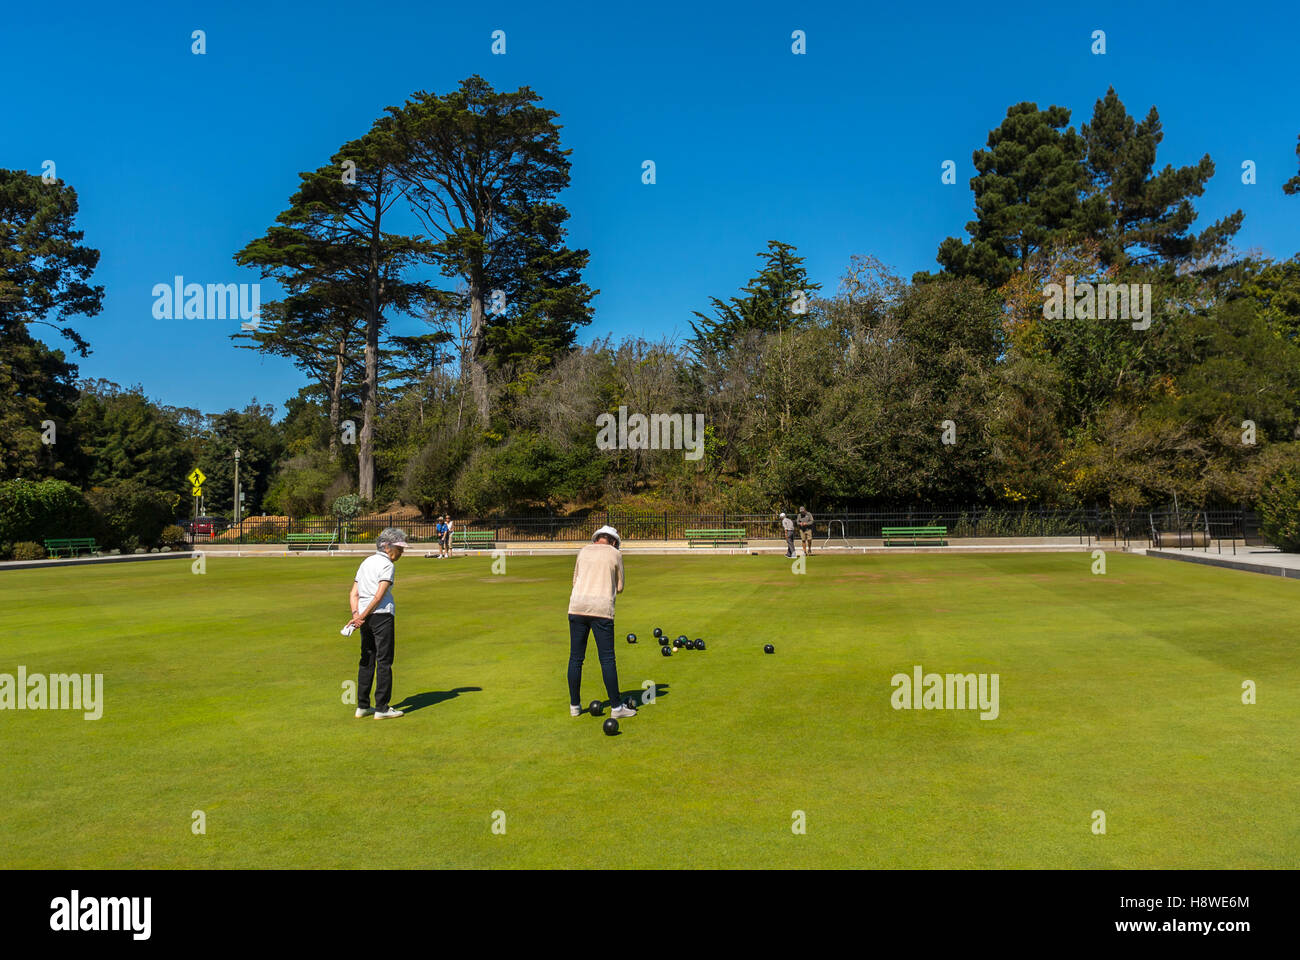 San Francisco, CA, USA, Senior Women Playing Lawn Bowling, Bocce Ball Game, Golden Gate Park, Grassy Field Stock Photo